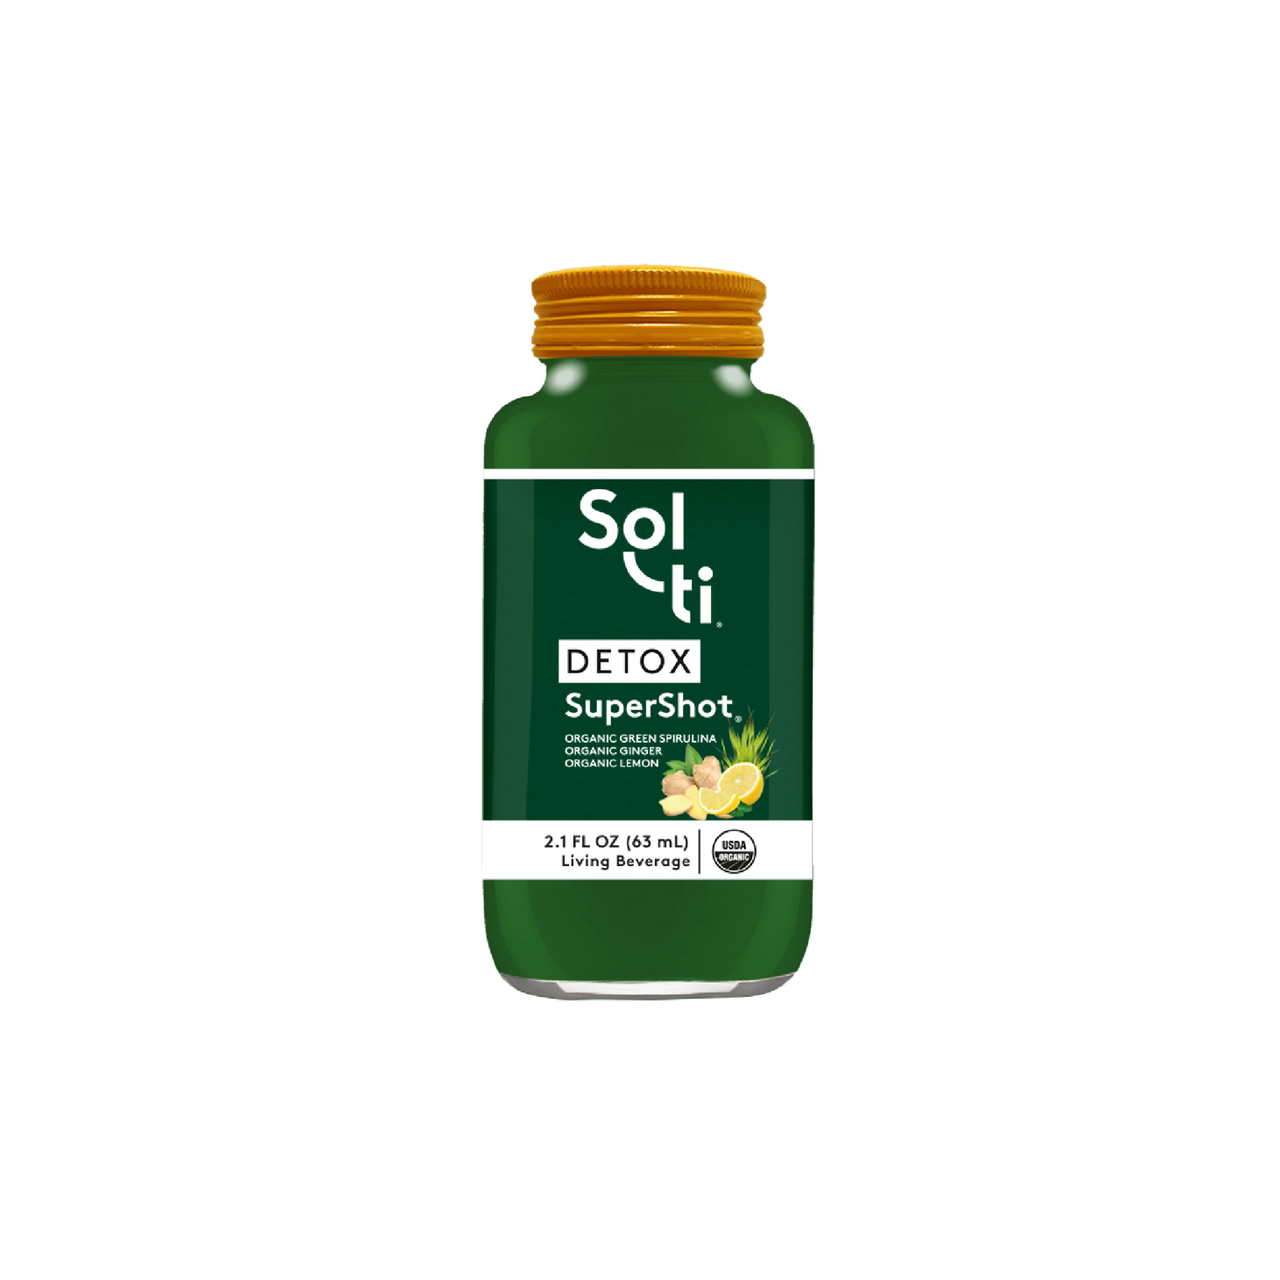 Sol-ti detox green spirulina shot 63ml 